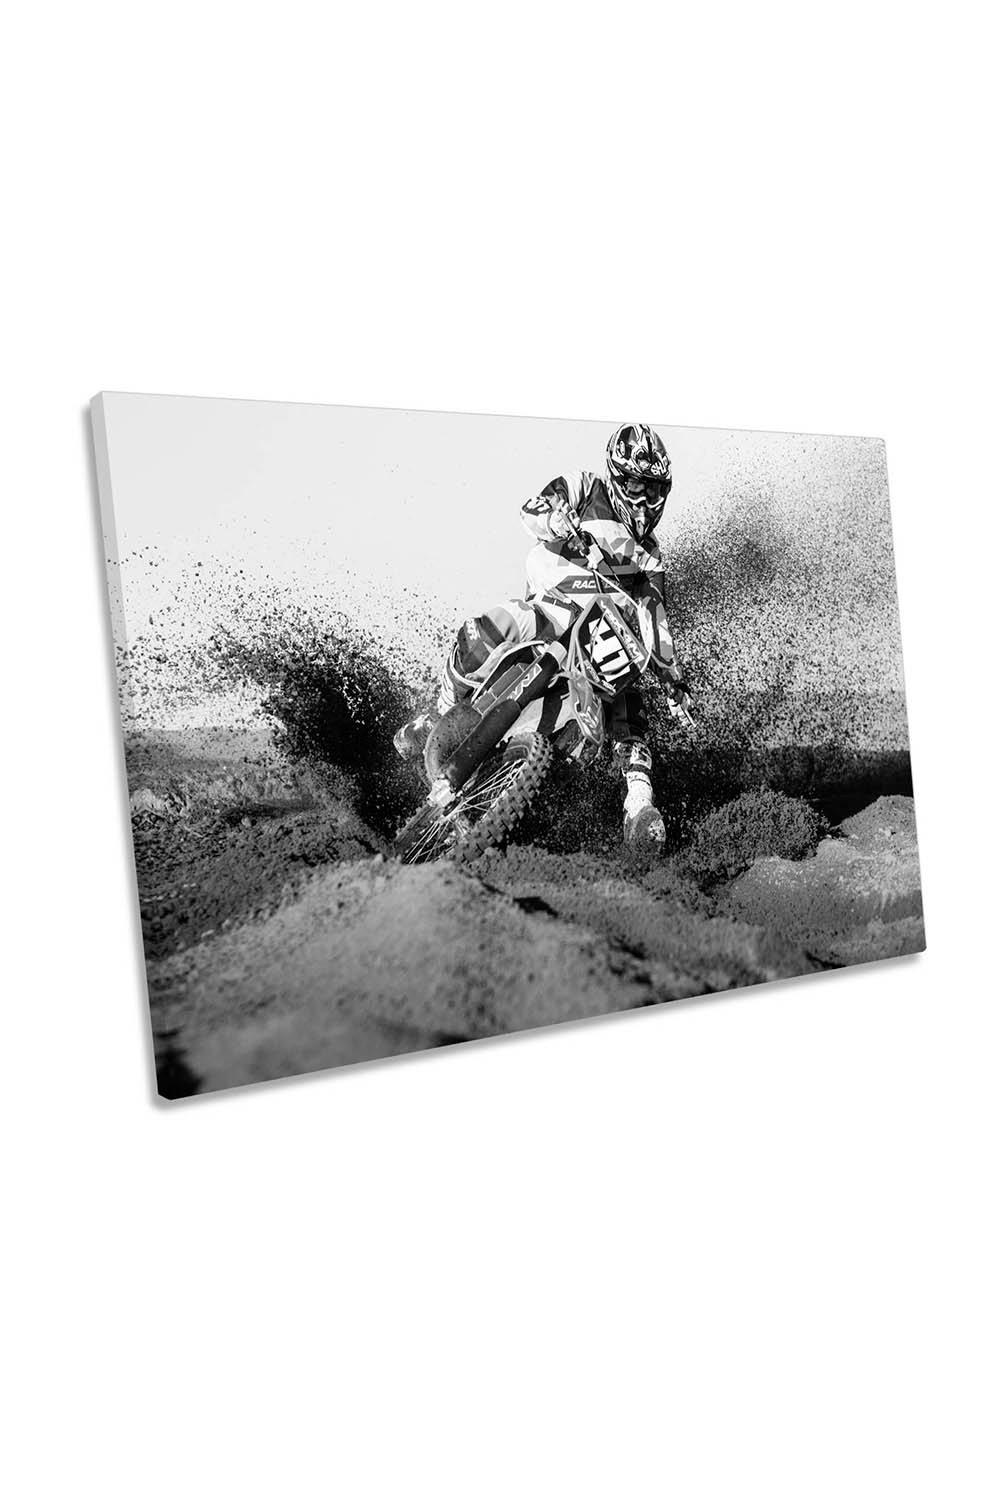 Motocross Rider Dirt Bike Canvas Wall Art Picture Print